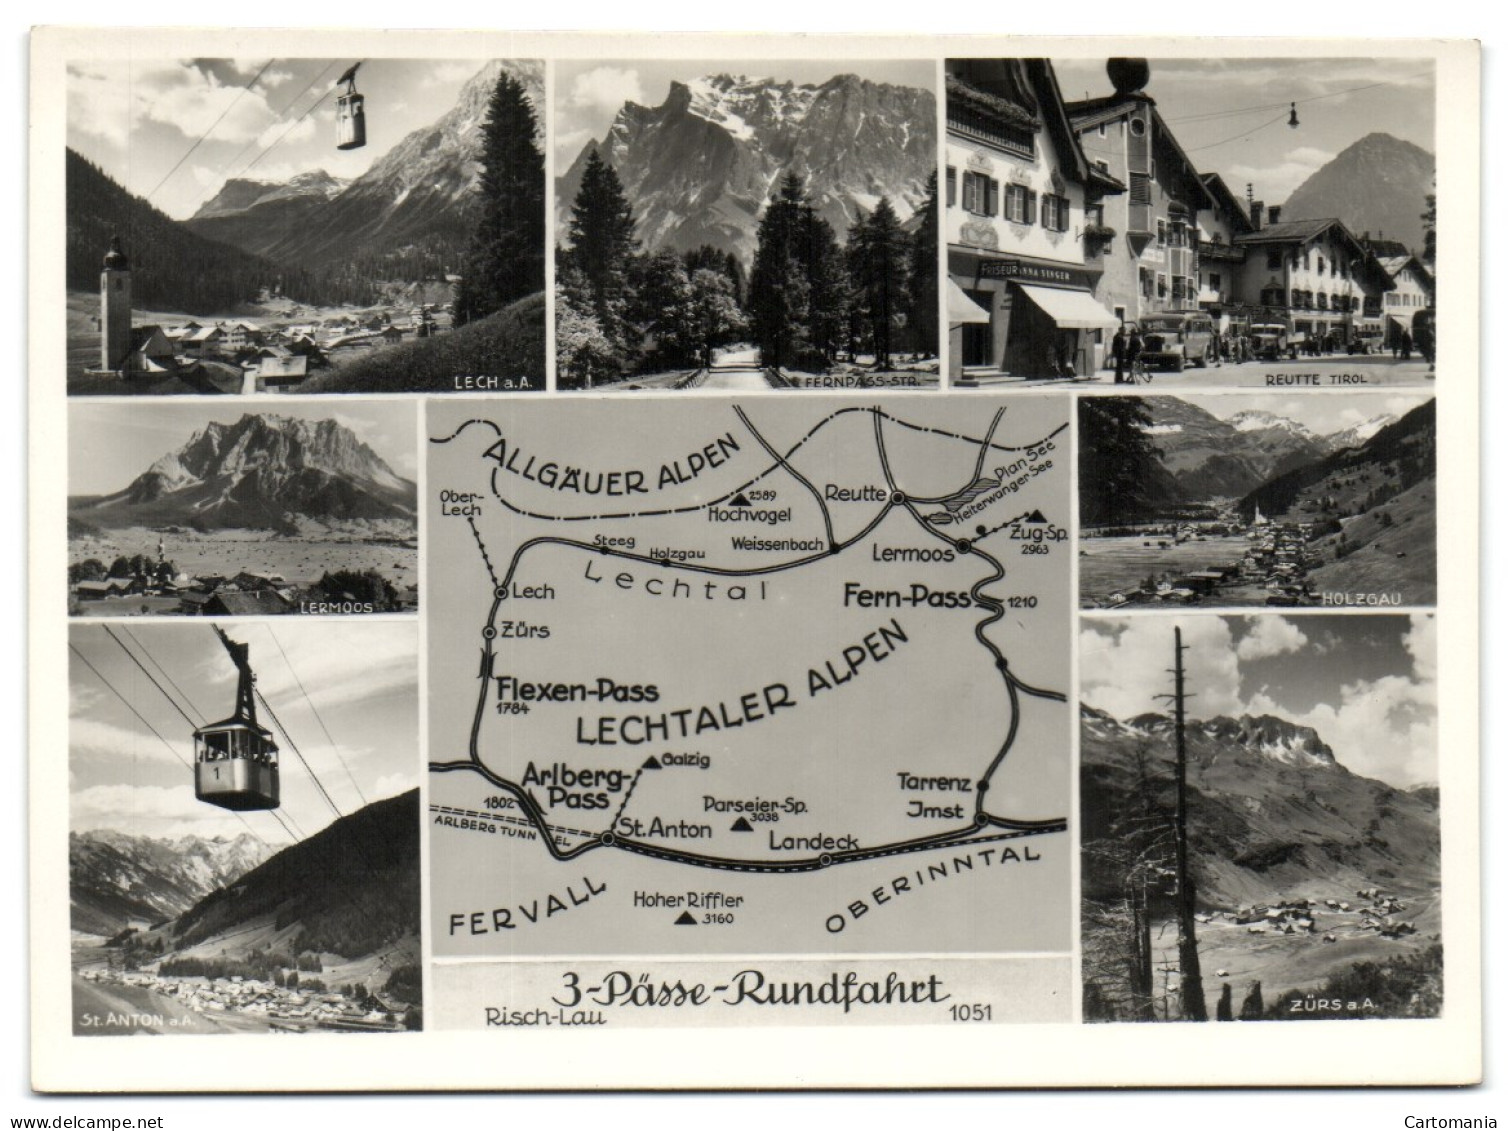 3-Pässe-Rundfahrt - Lechtaler Lapen - Lechtal